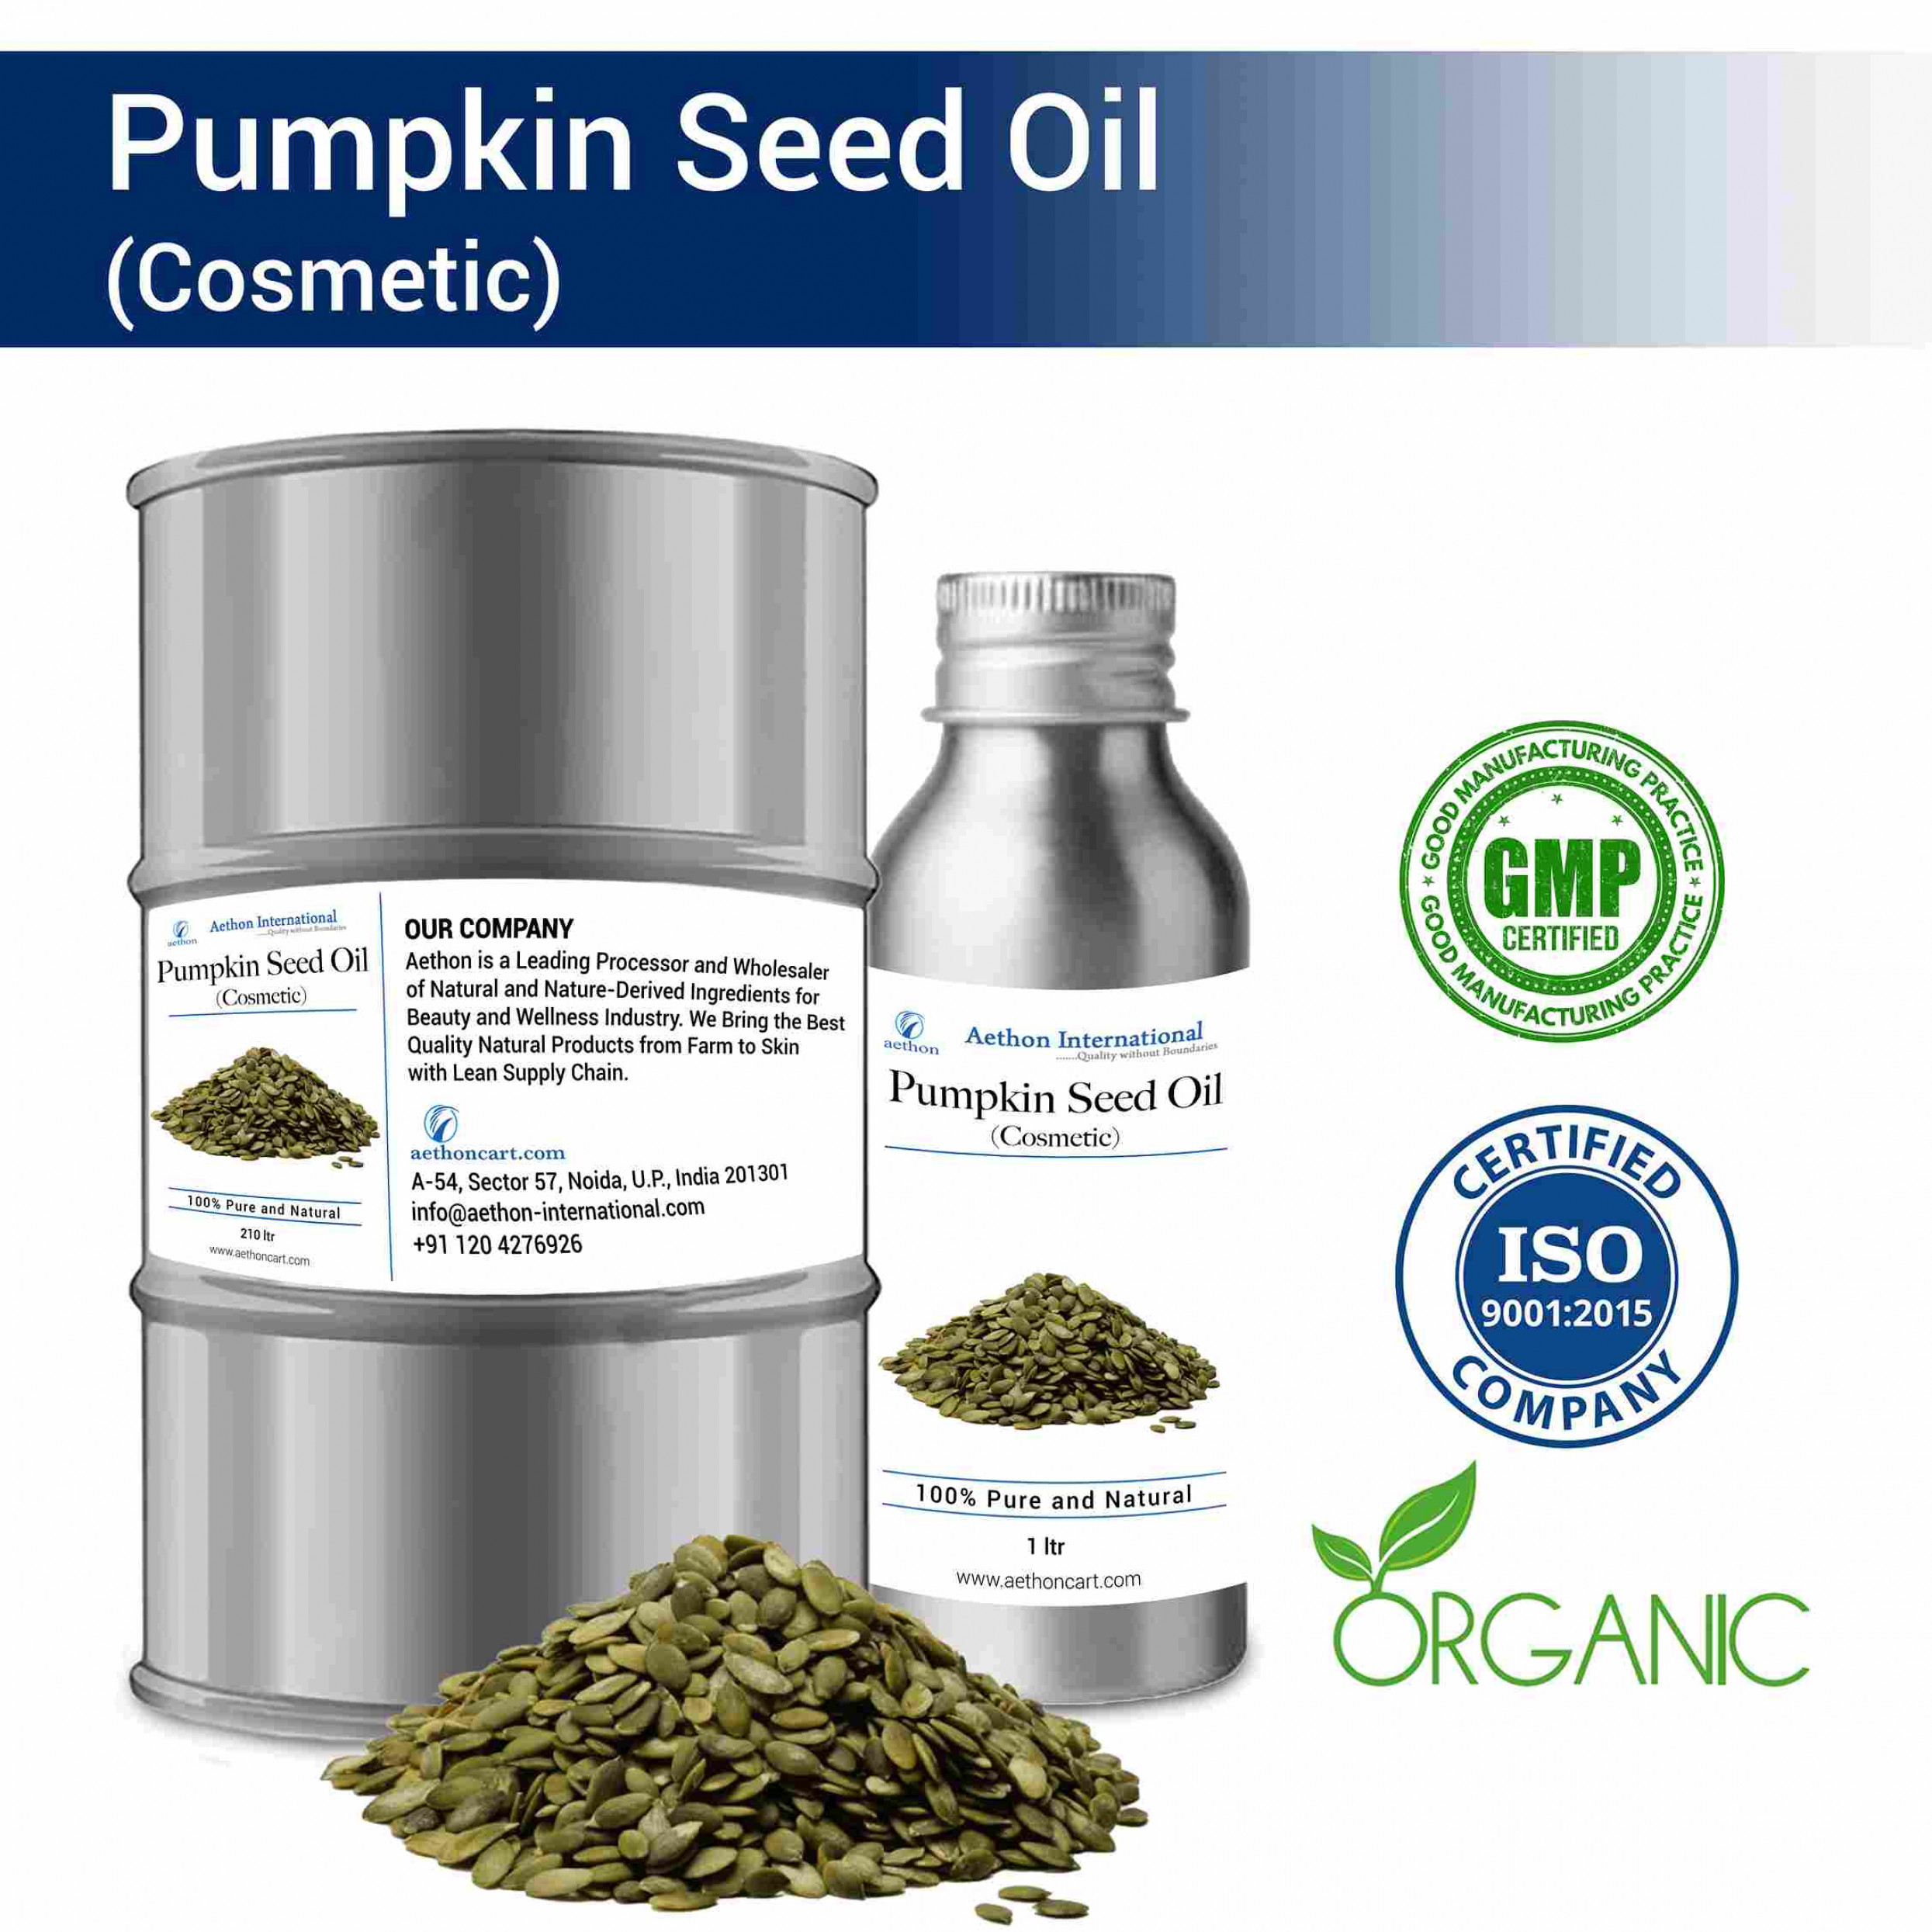 Pumpkin Seed Oil (Cosmetic)